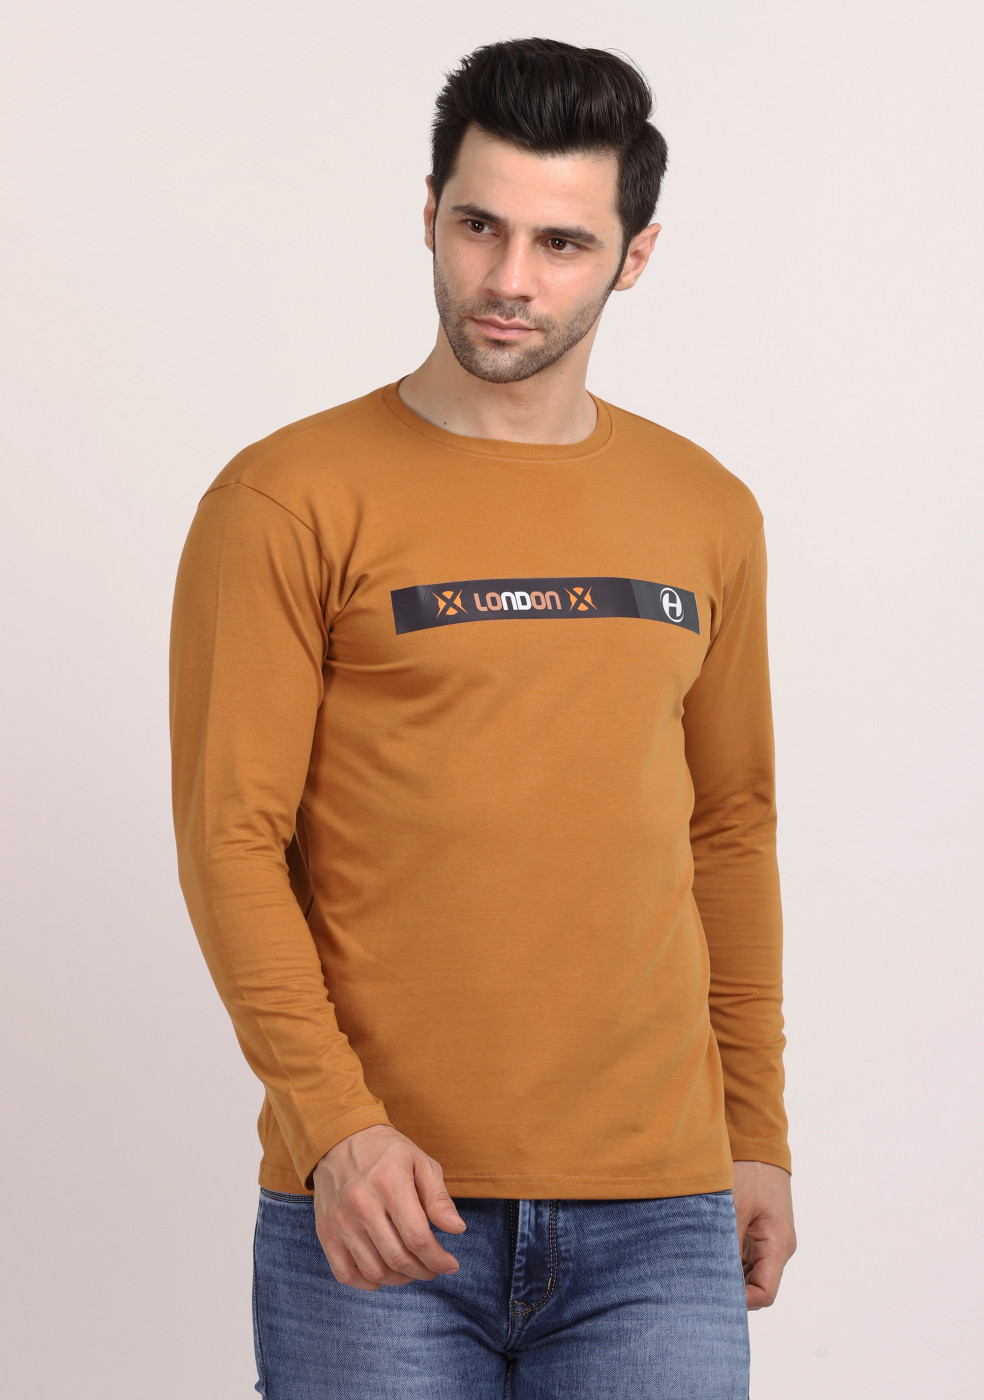 HUKH Full Sleeve Mustard Slim Fit T Shirt Cotton Lycra Fabric for Men